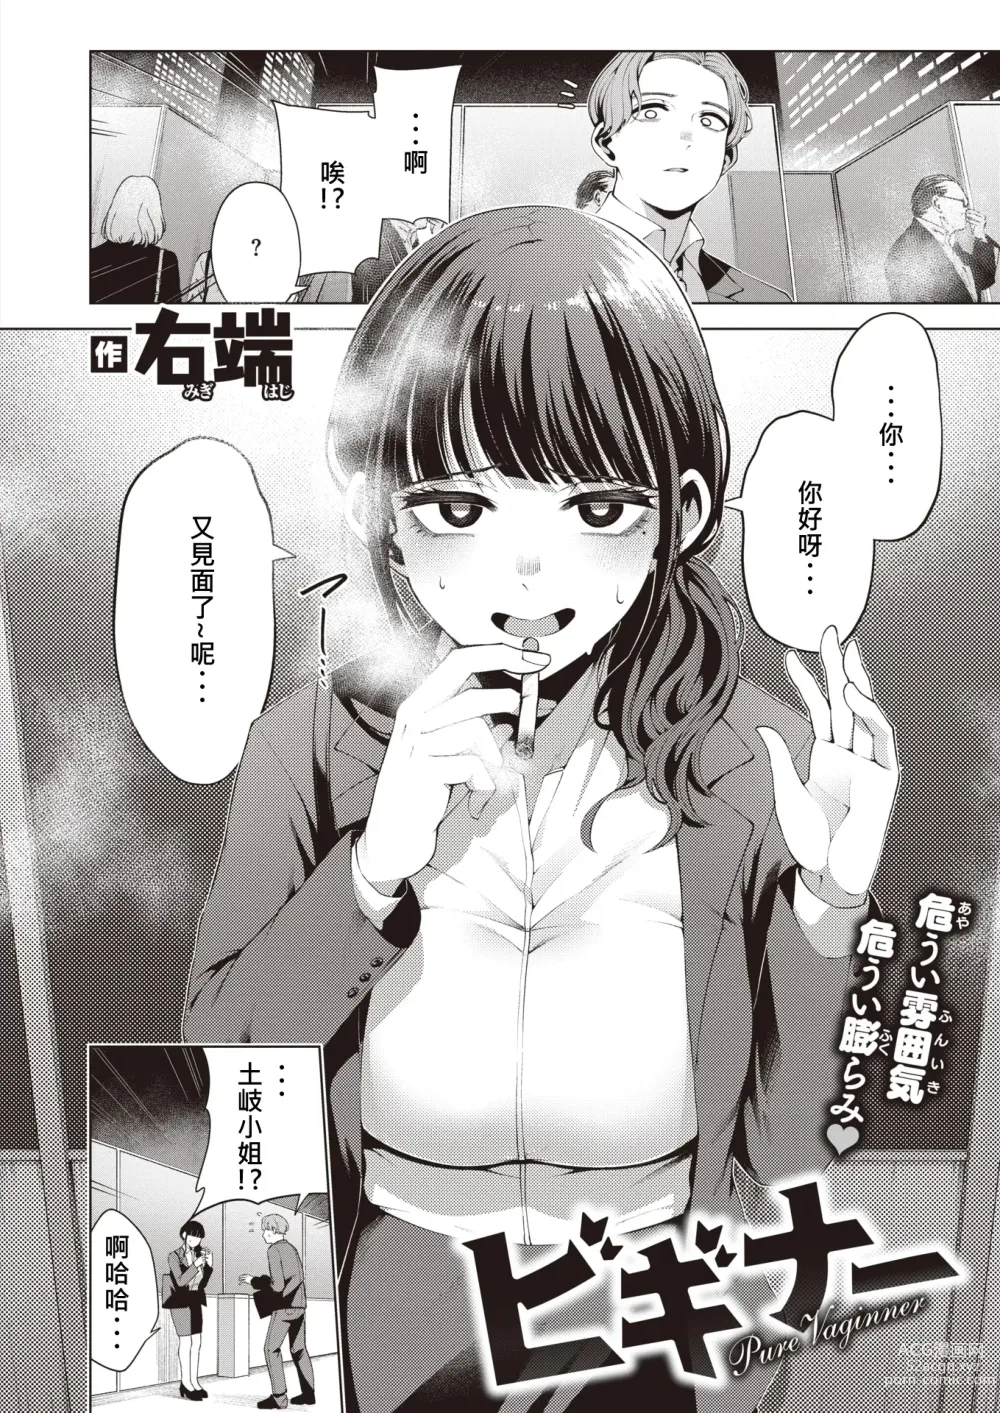 Page 3 of manga Beginner - Pure Vaginner